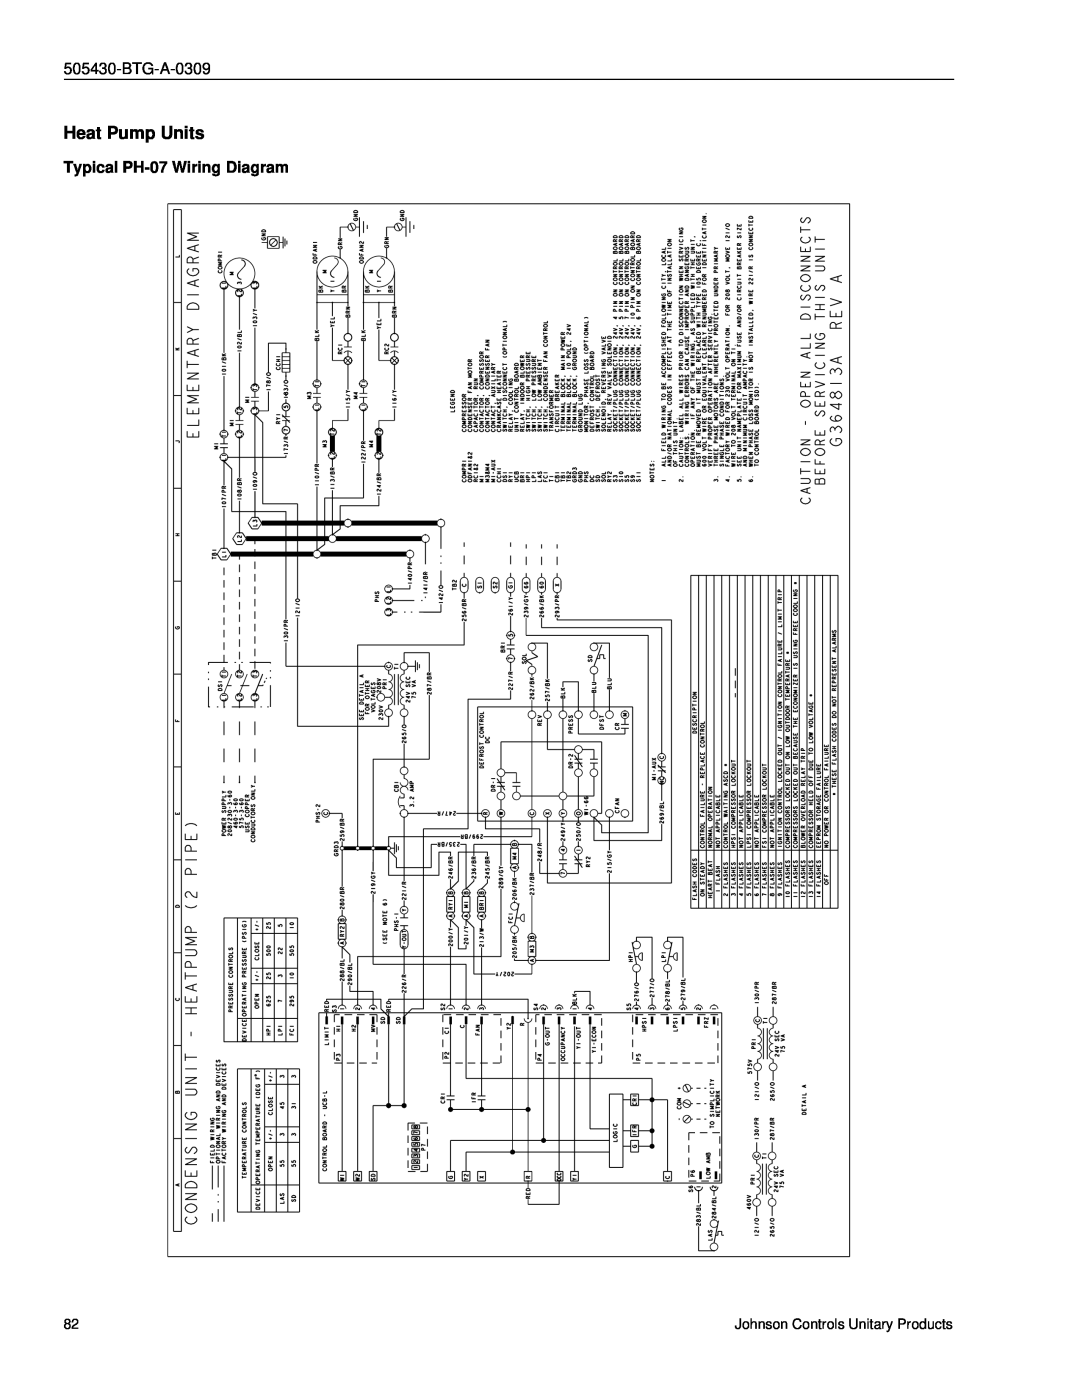 Johnson Controls R-410A manual Heat Pump Units, Typical PH-07Wiring Diagram 